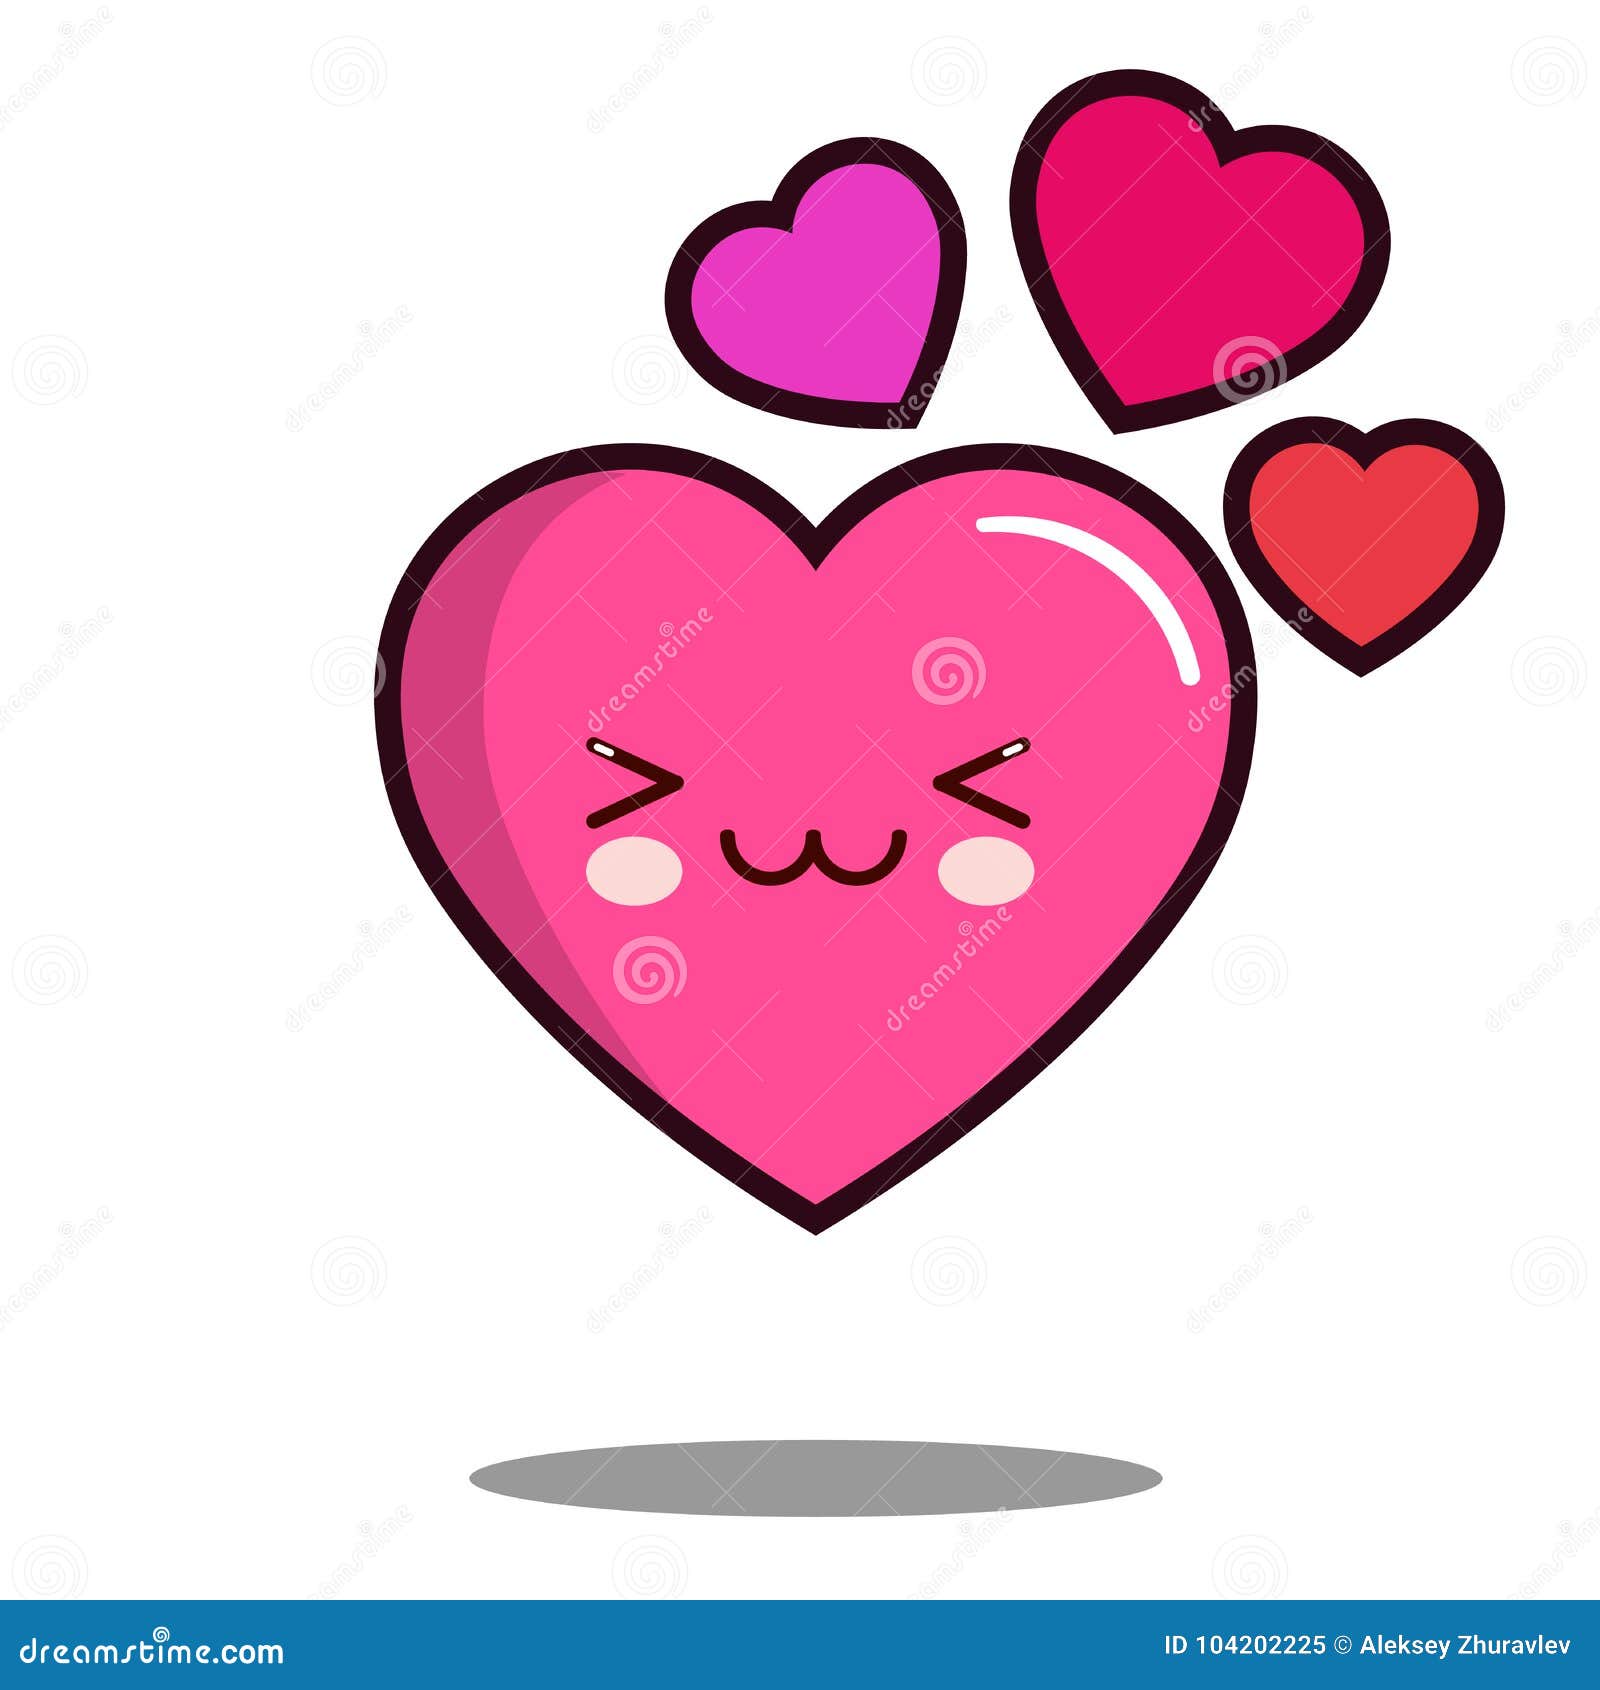 Emoticon Cute Love Heart Cartoon Character Icon Kawaii Flat Design Stock Illustration Illustration Of Kawaii Character